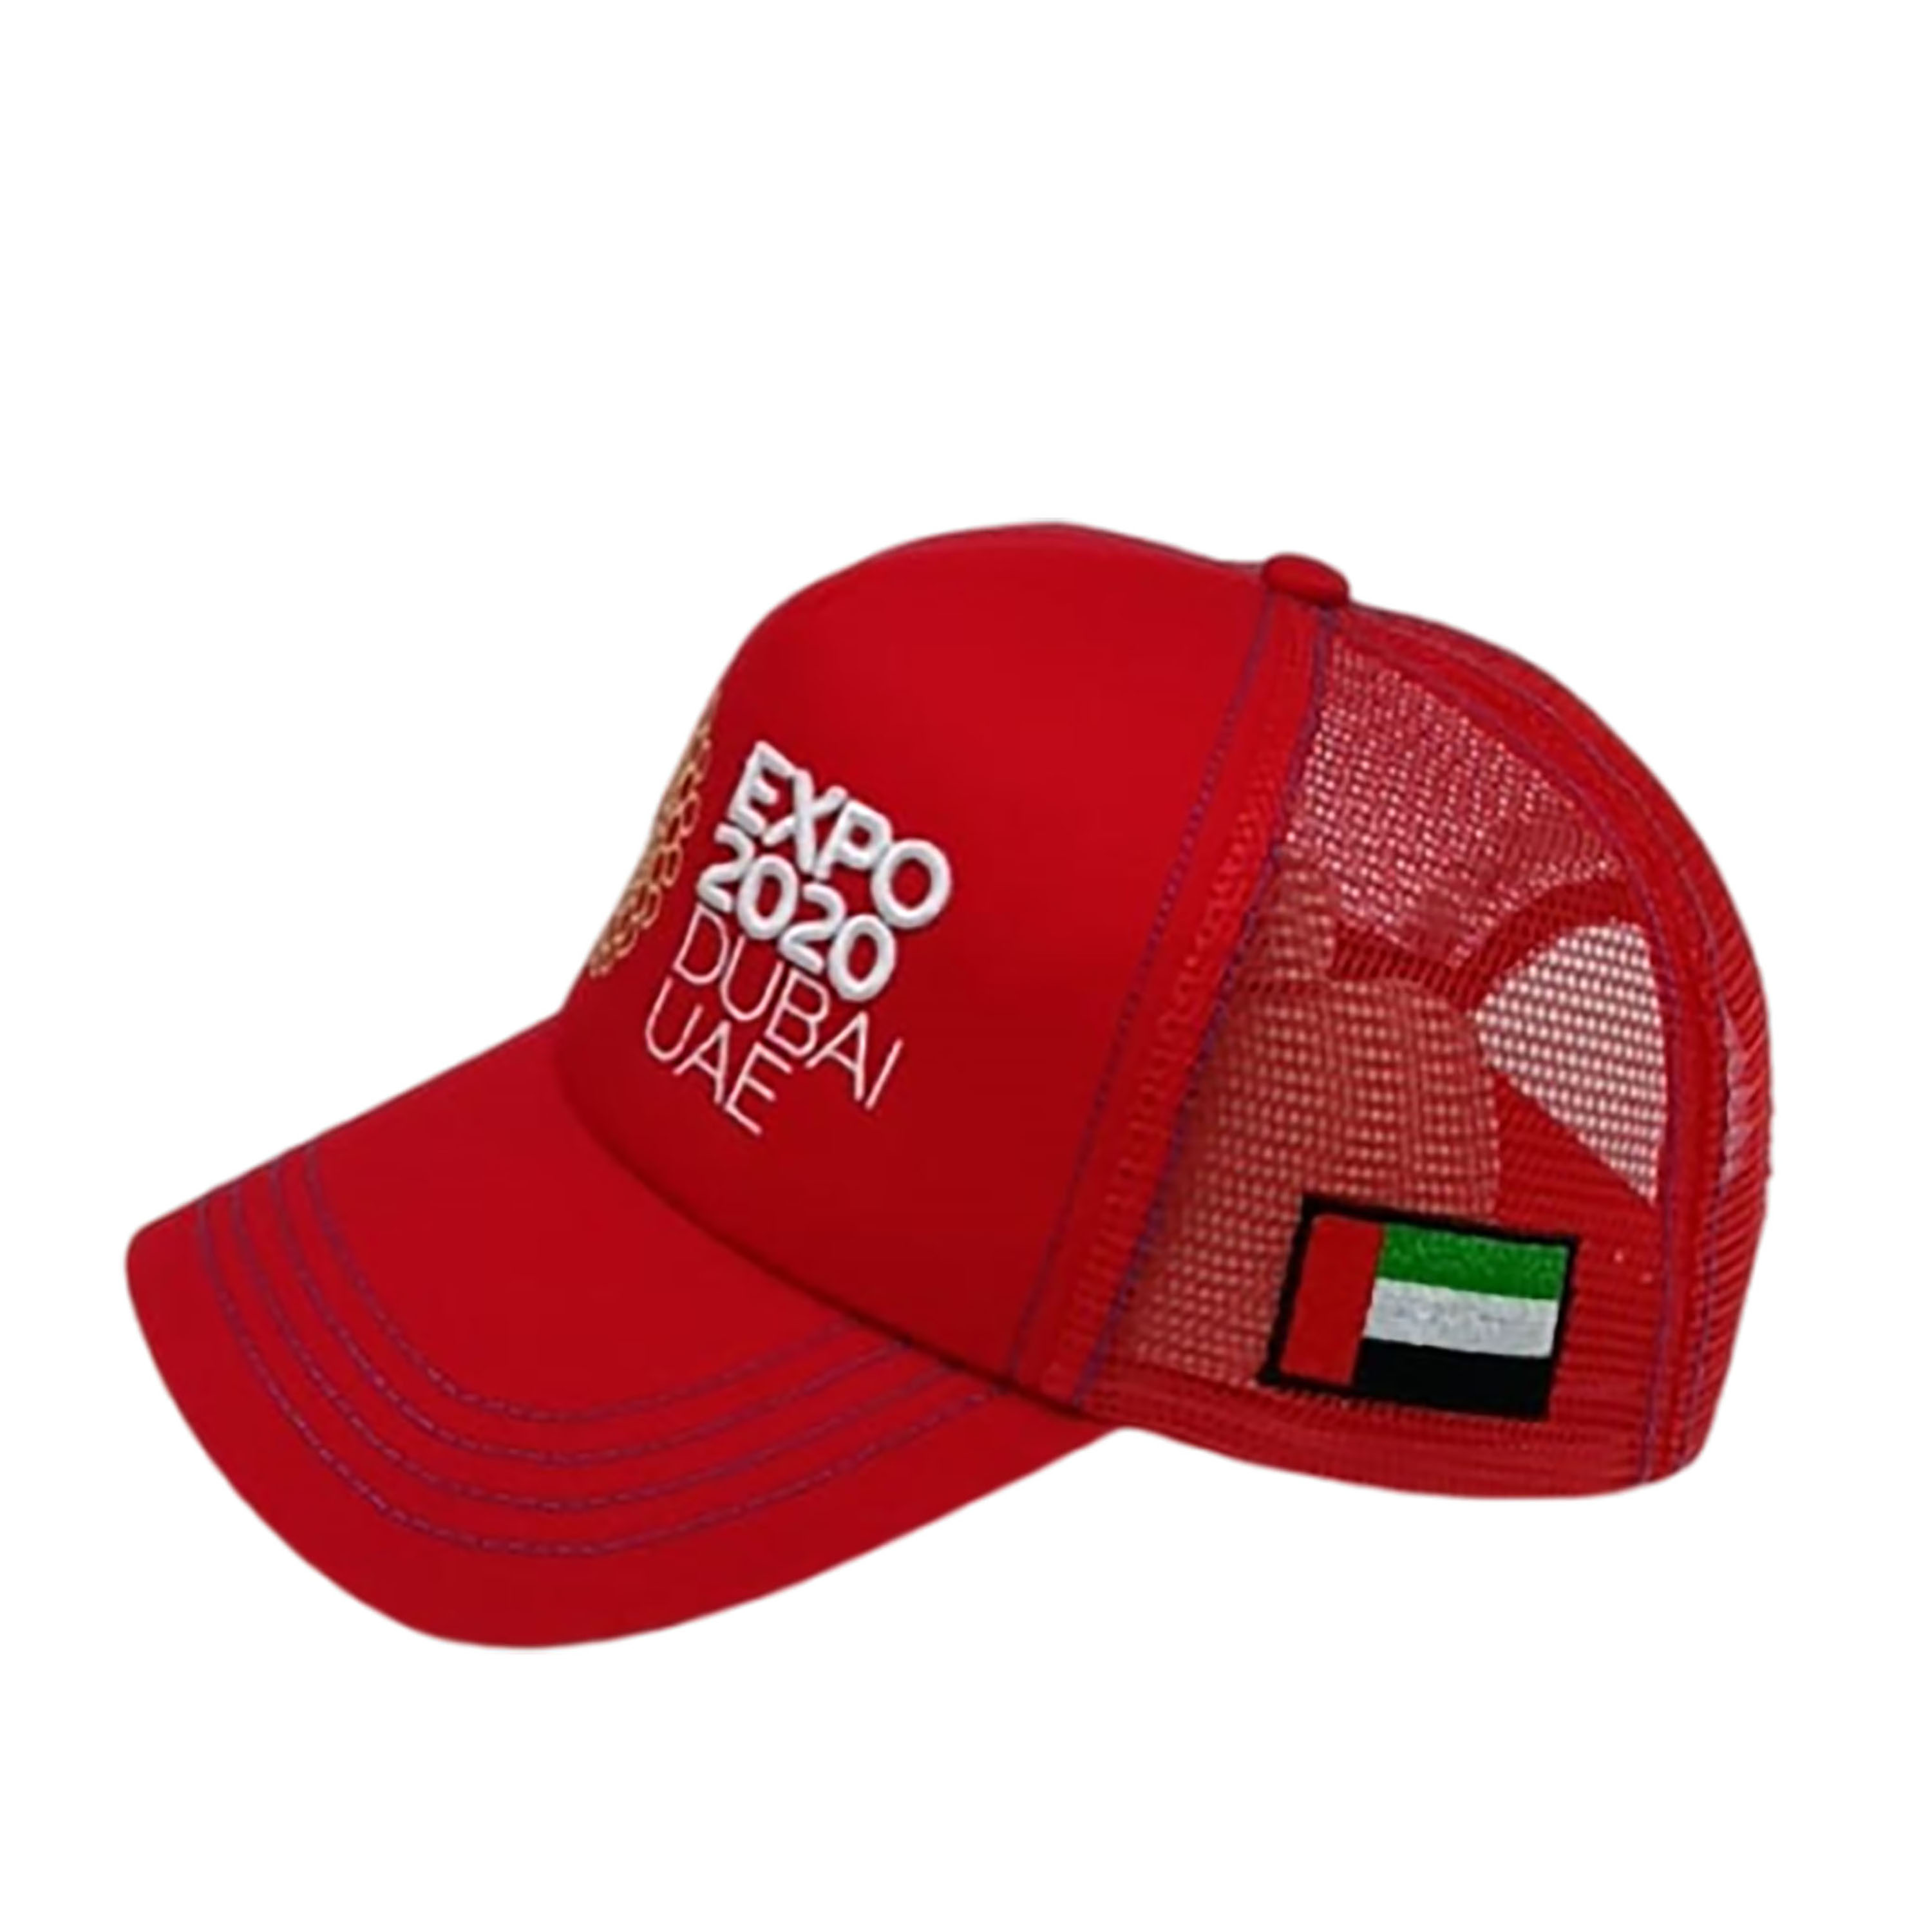 EXPO 2020 DUBAI CAP THREE COLOR DUBAI CAP